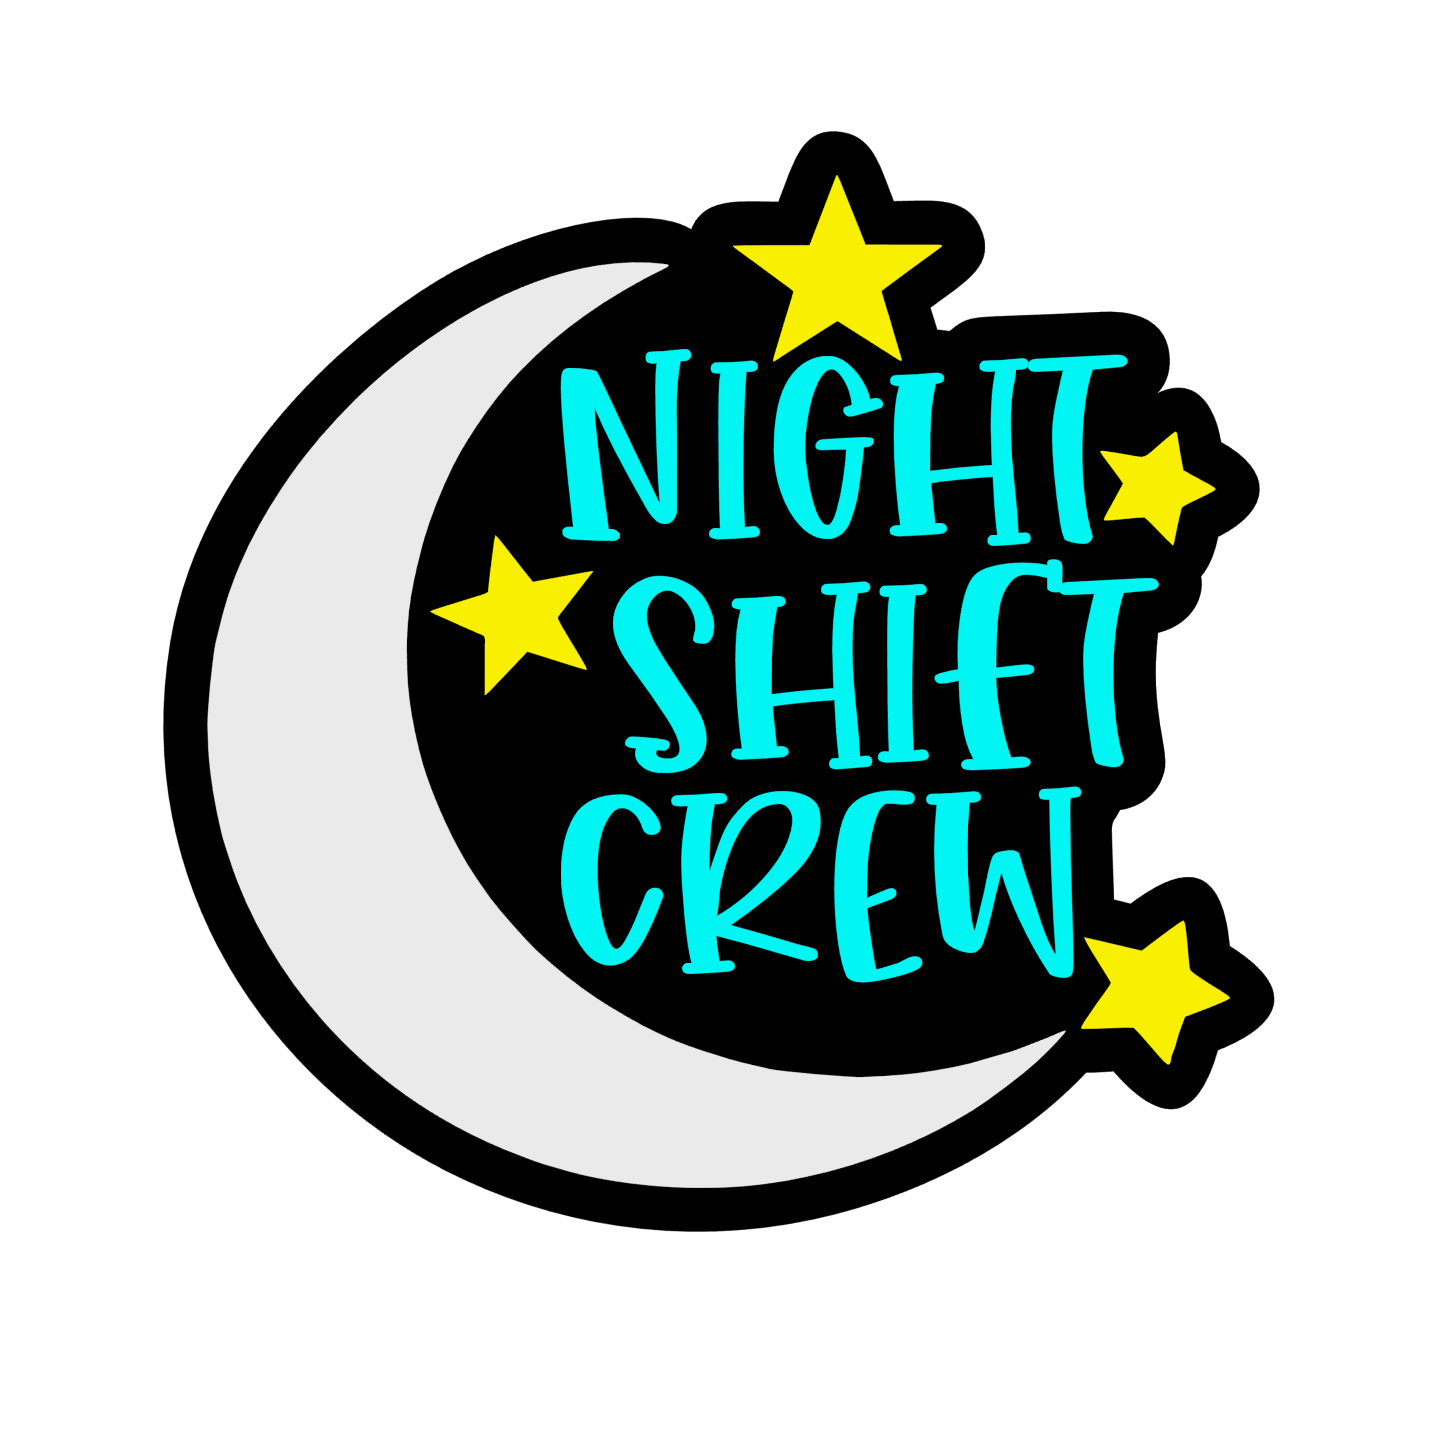 Night Shift|Paperback